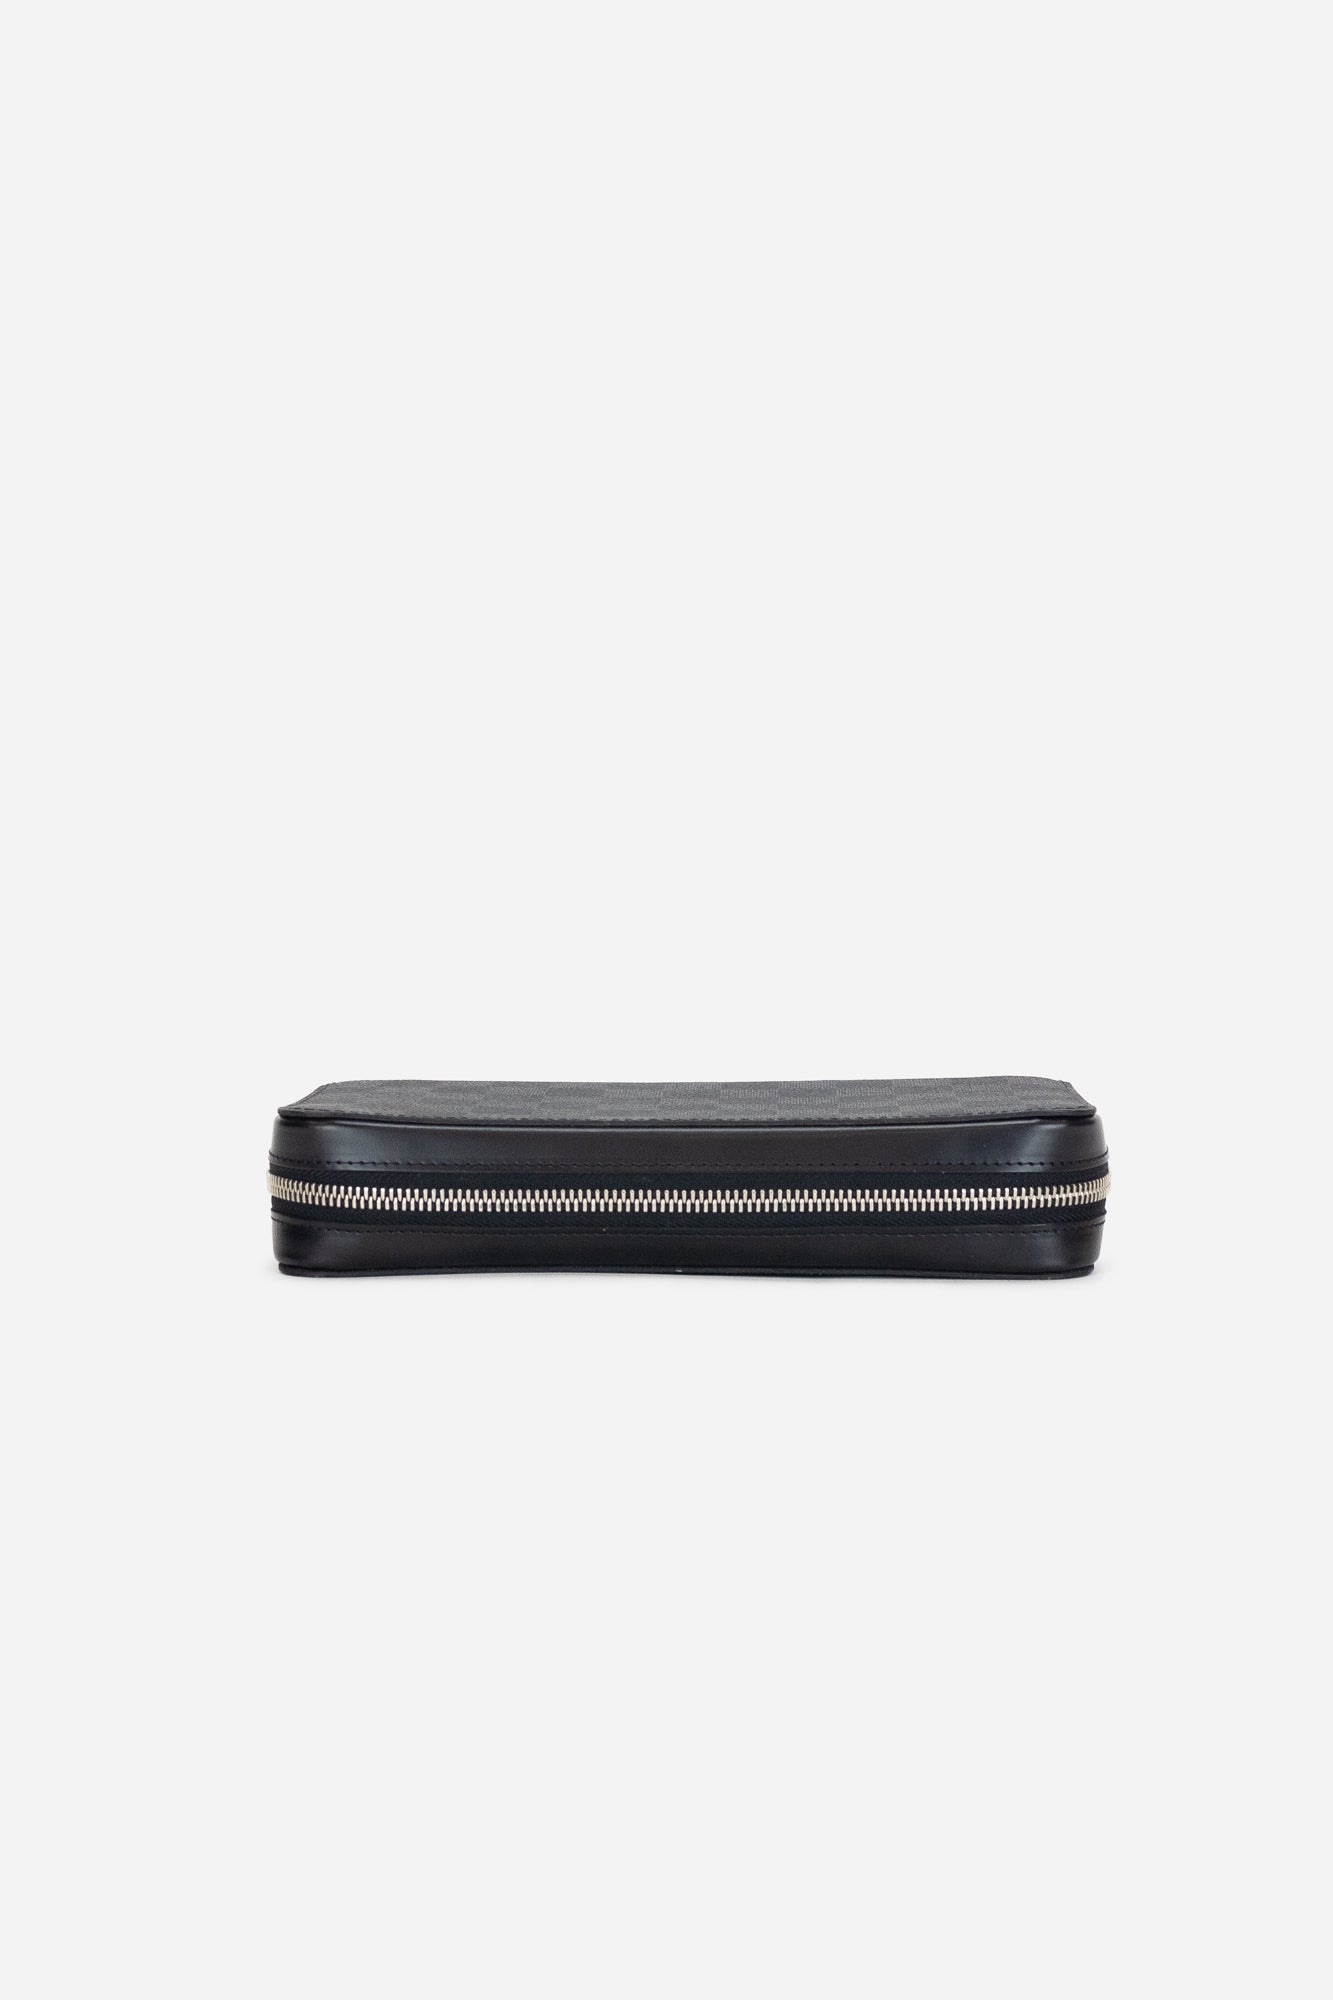 Damier Graphite Zippy XL Large Zipped Wallet